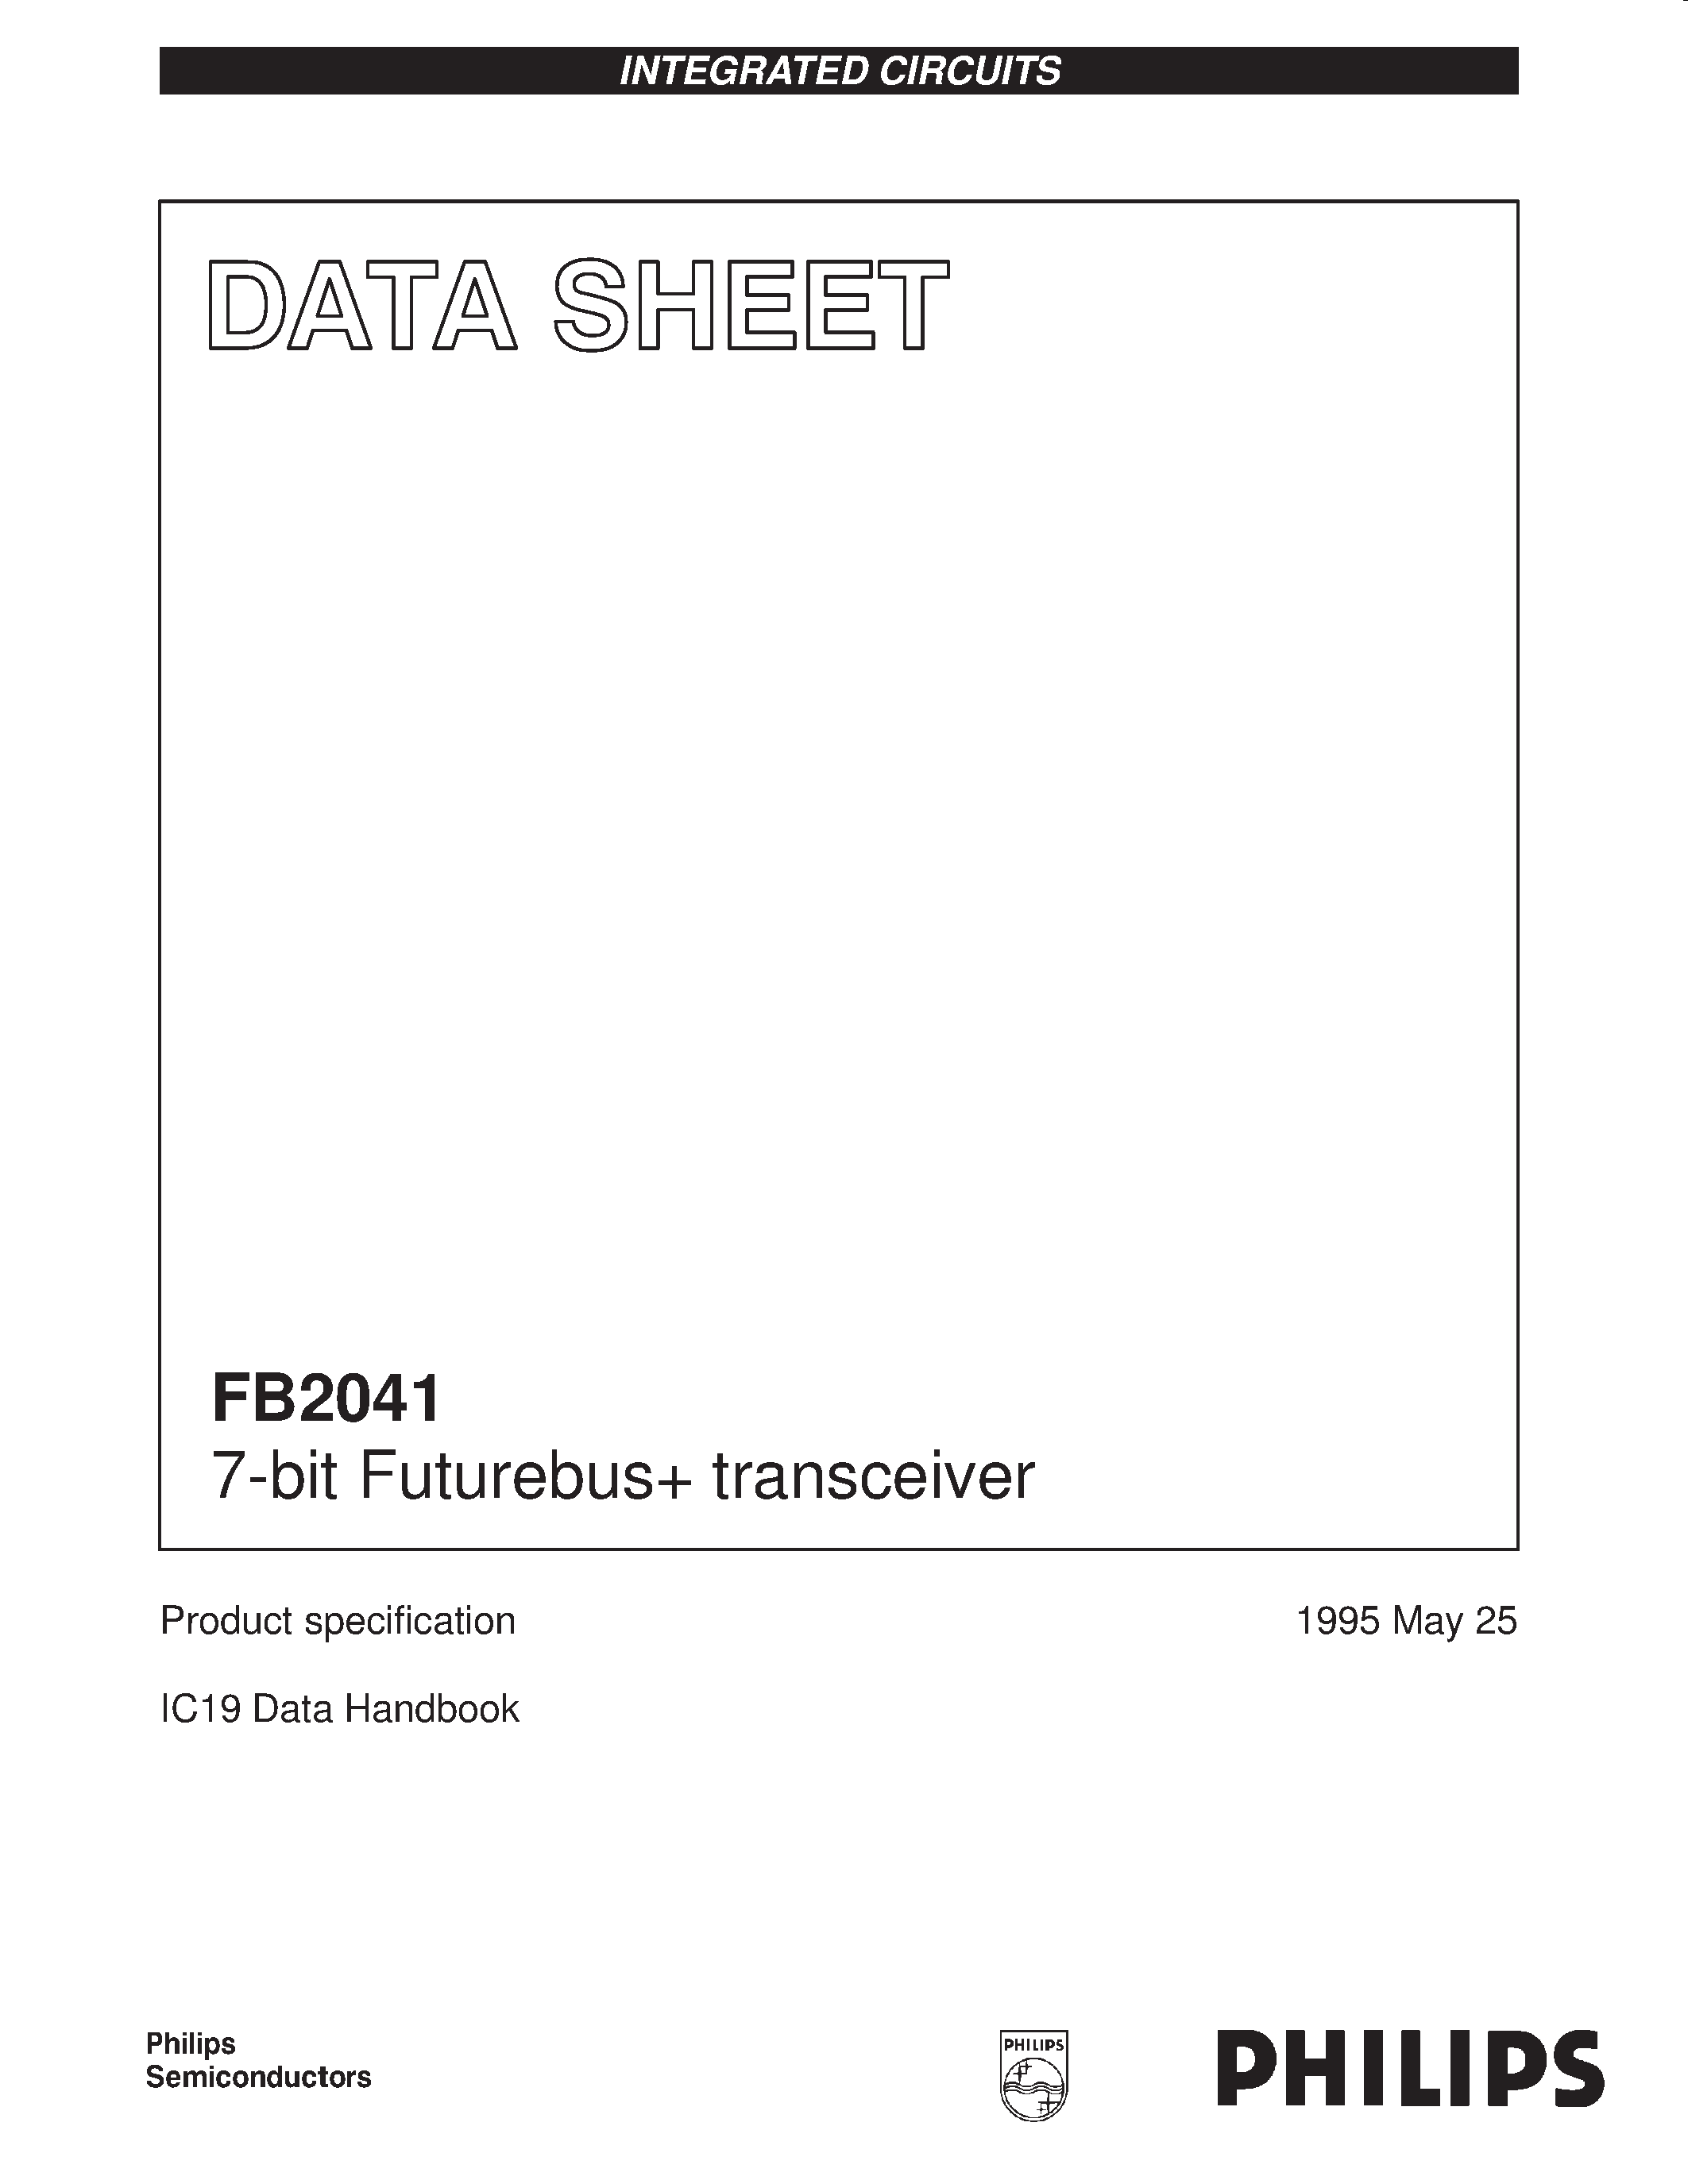 Даташит CD3207BB - 7-bit Futurebus transceiver страница 1